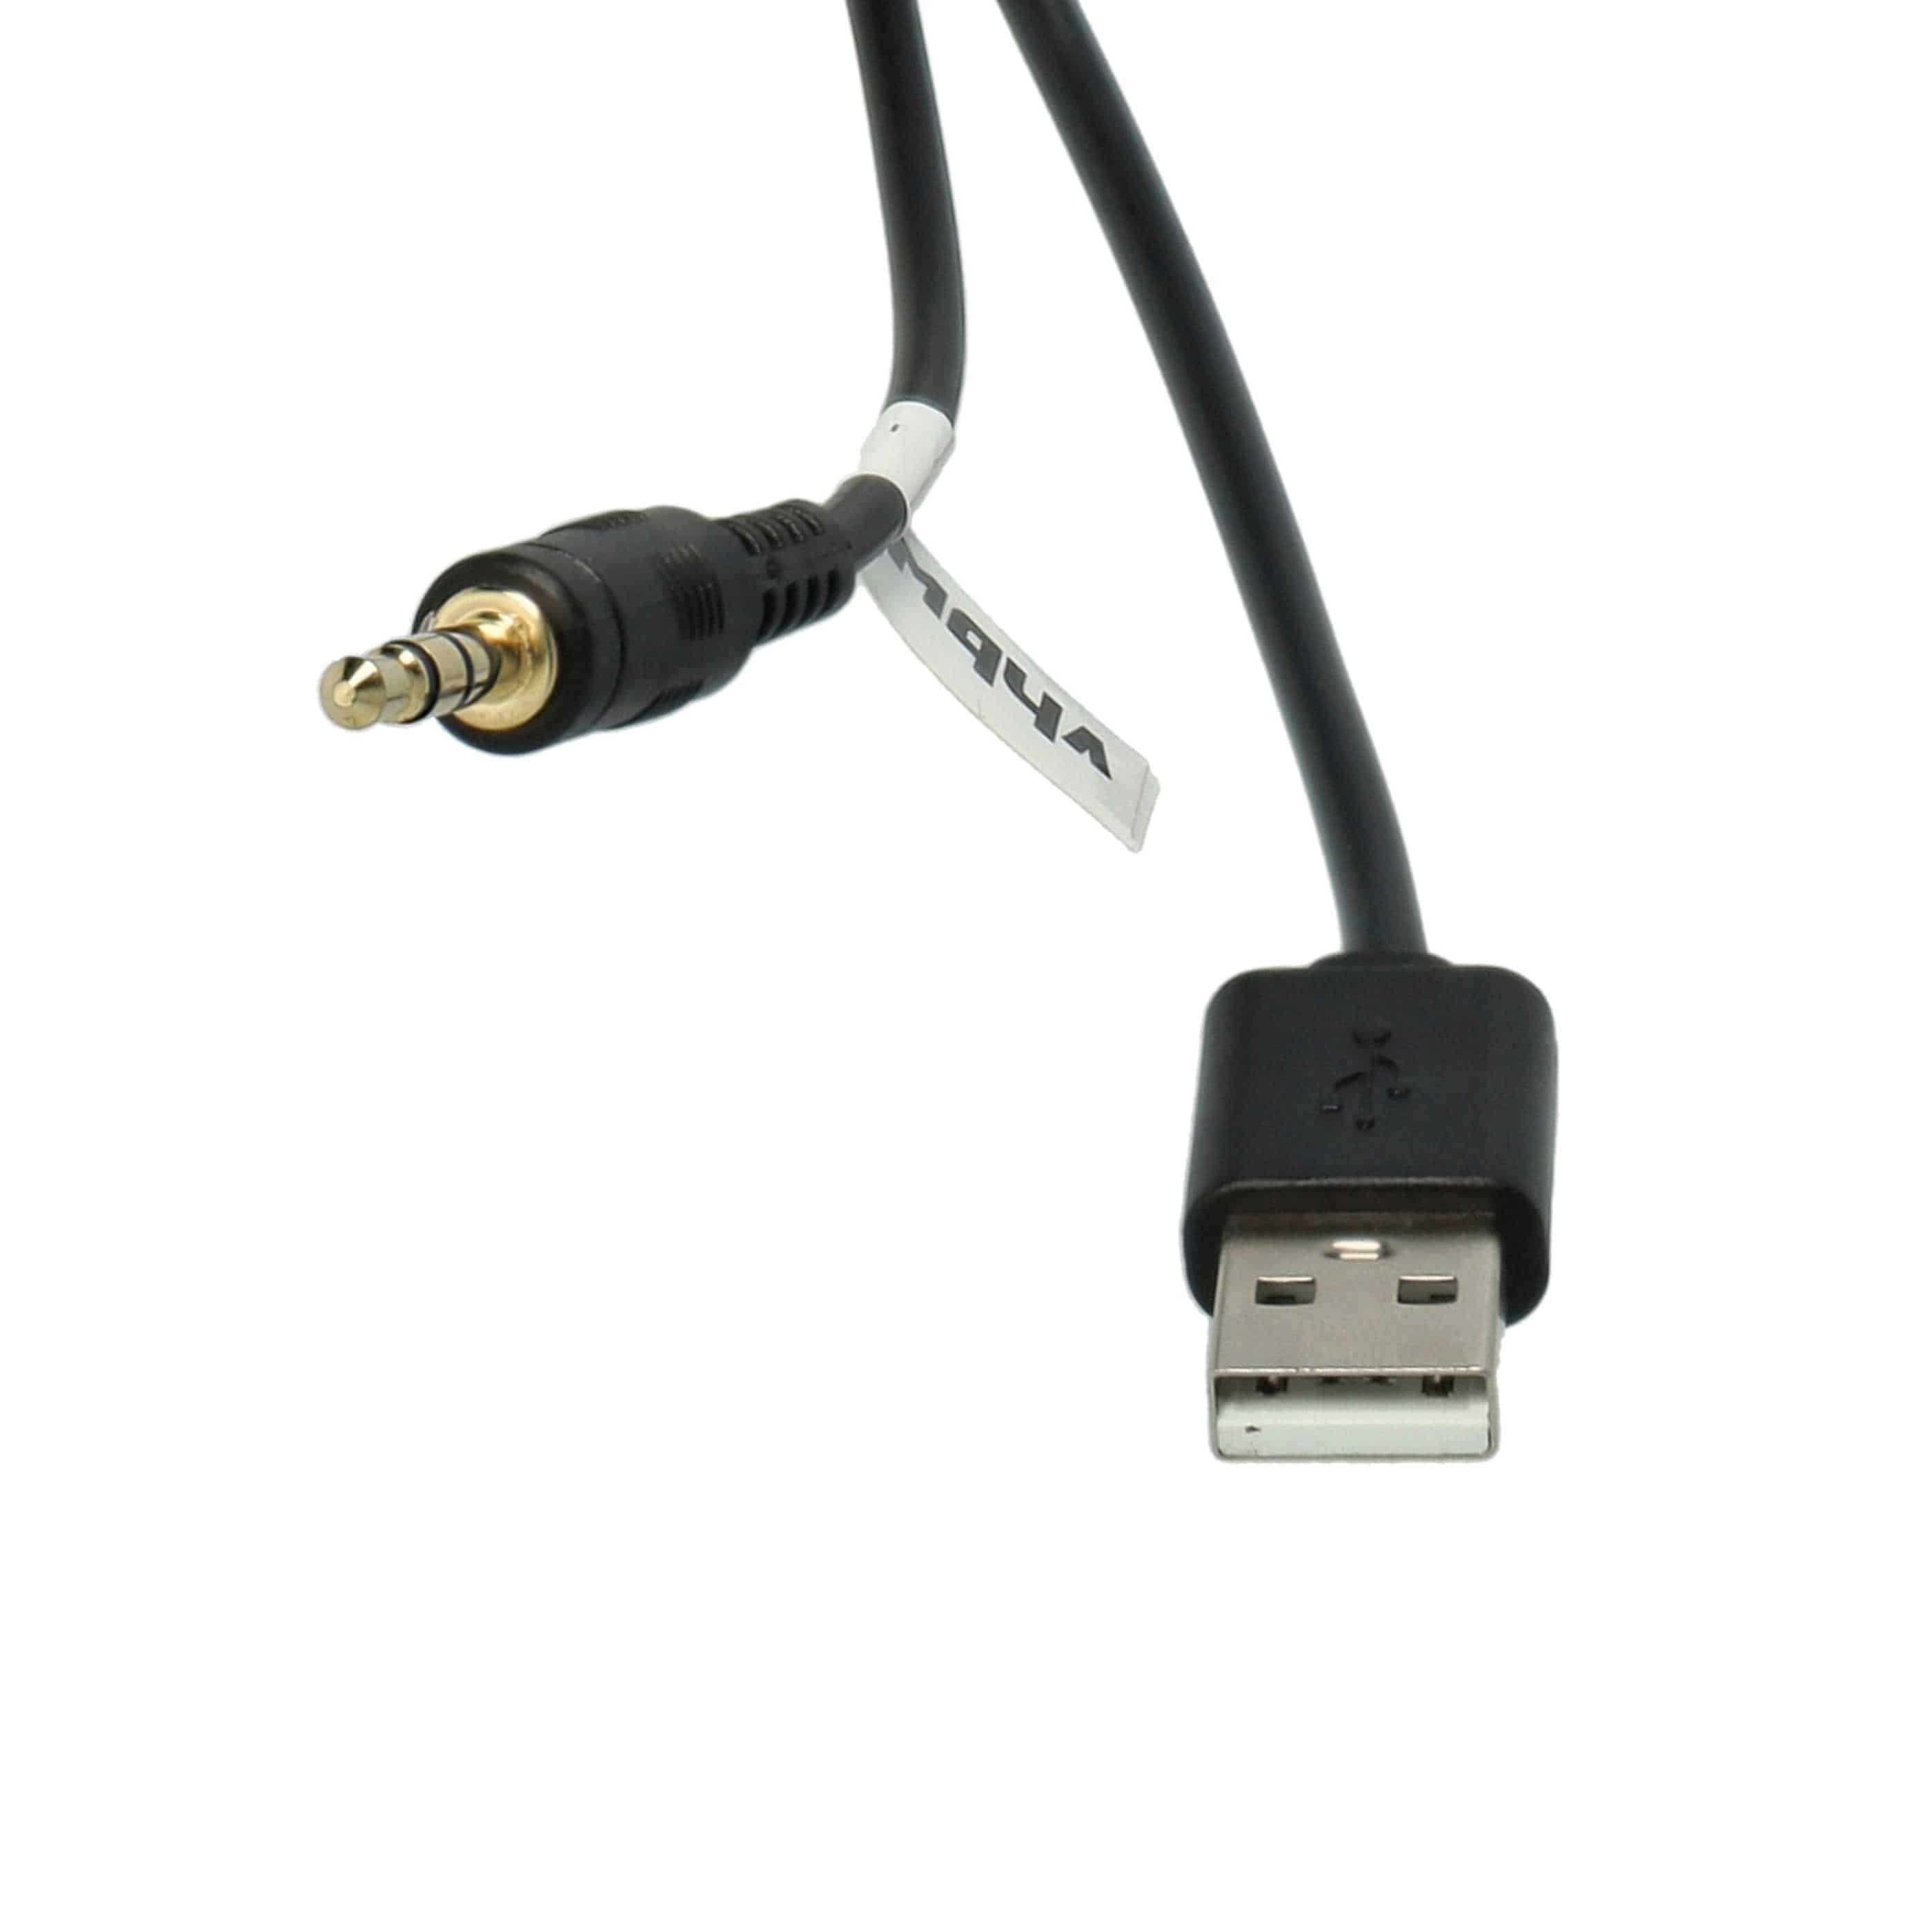 Adapteur audio AUX pour auto radio MINI, BMW R56 – USB, Bluetooth